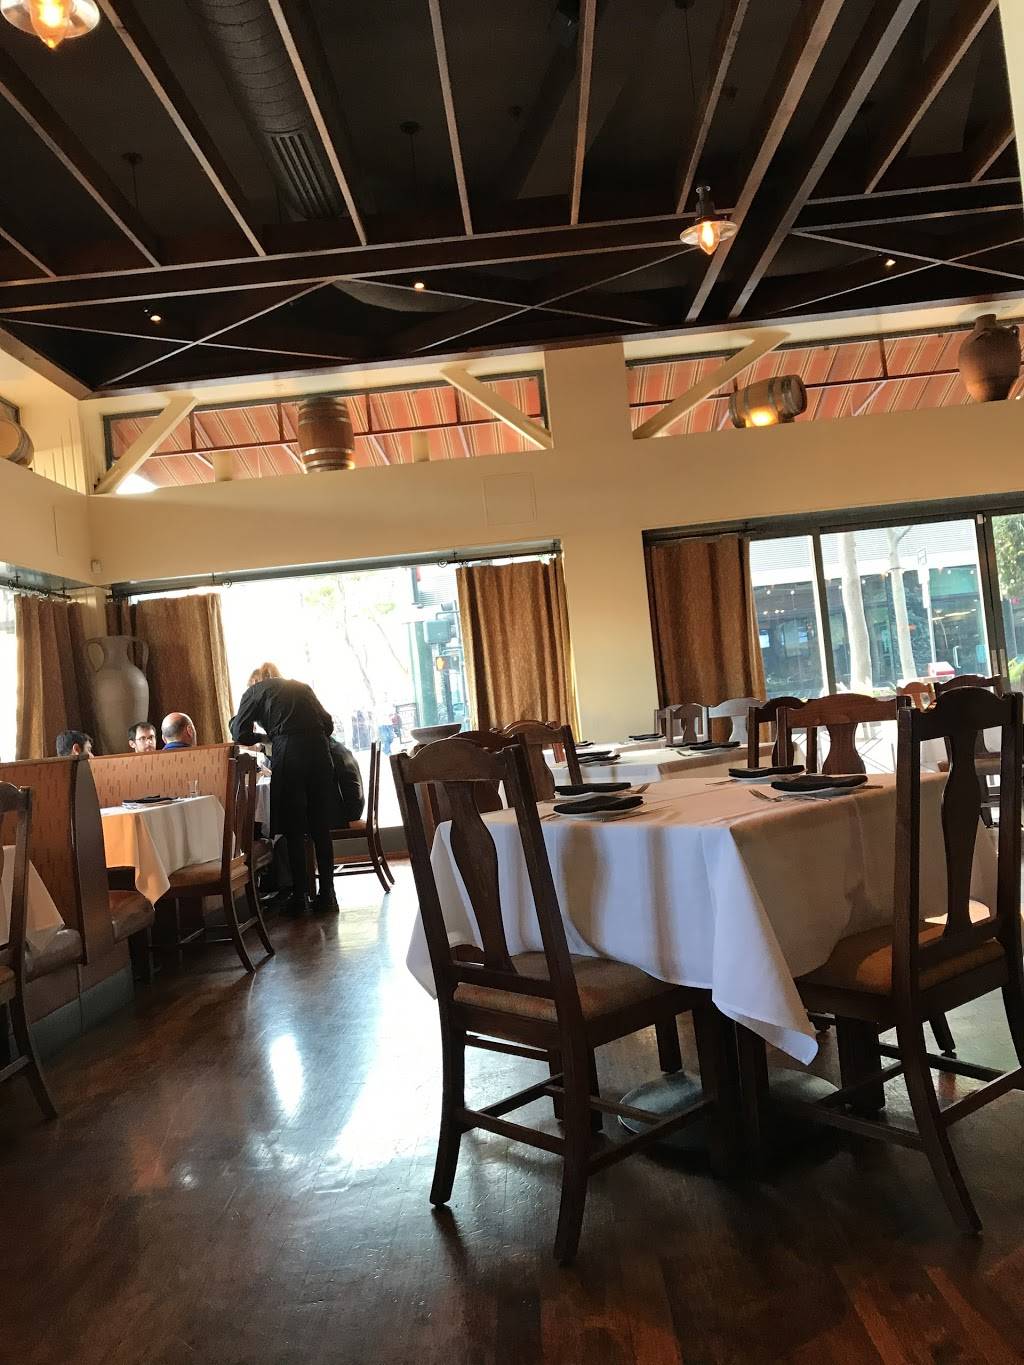 Nemea Greek Taverna | restaurant | 96 S 1st St, San Jose, CA 95113, USA | 4082794225 OR +1 408-279-4225